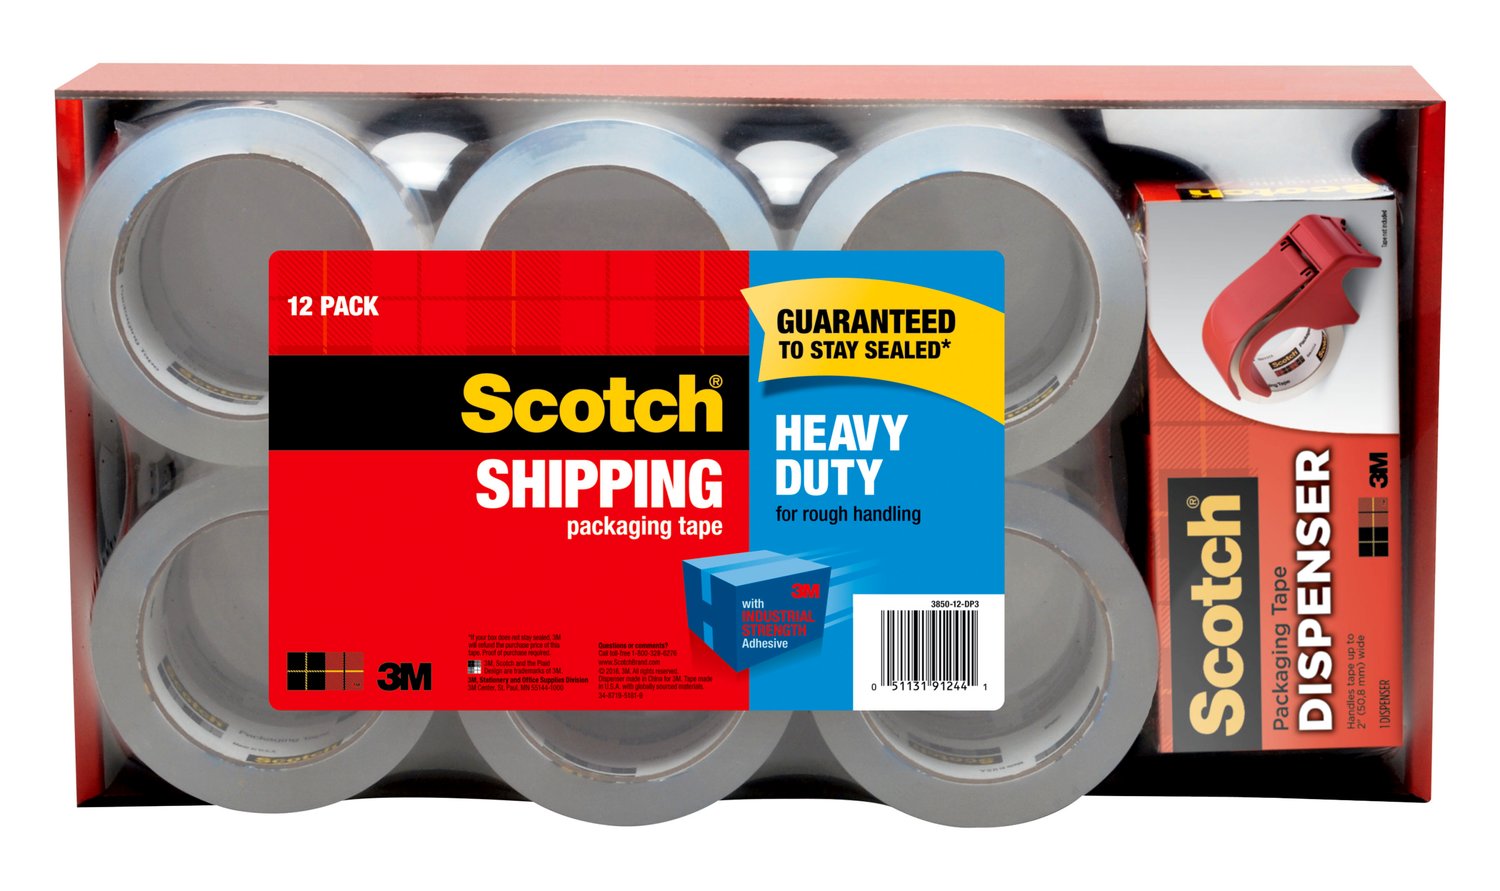 7100160775 - Scotch Packaging Tape Heavy Duty Shipping, 3850-12-DP3, 1.88 in x 54.6
yd (48 mm x 50 m), 12 Rolls/Pack